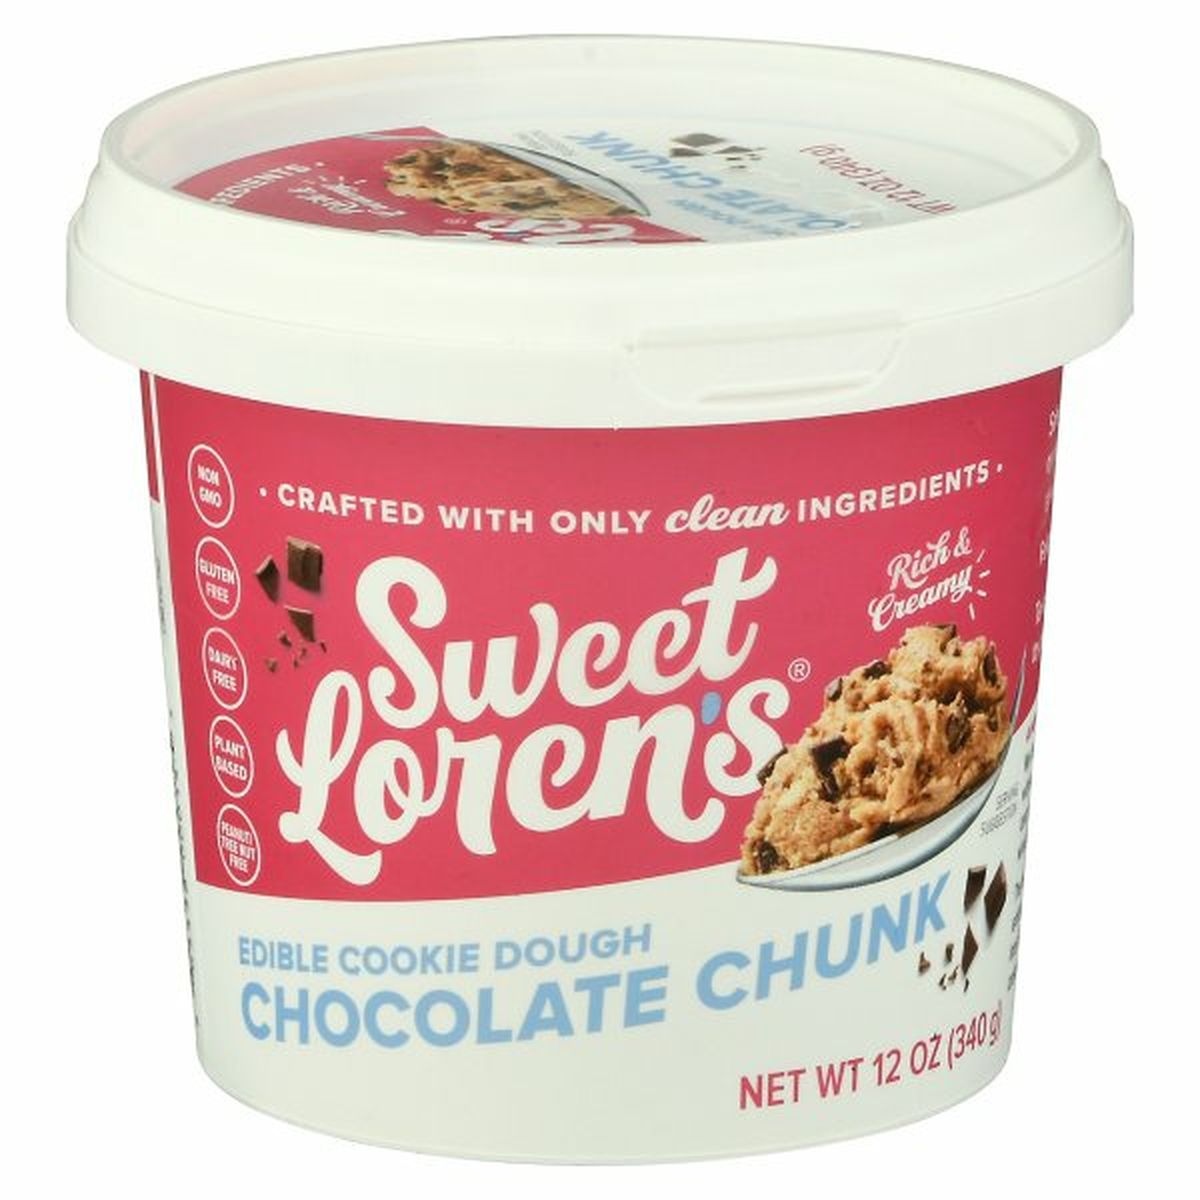 Calories in Sweet Loren's Edible Cookie Dough, Chocolate Chunk